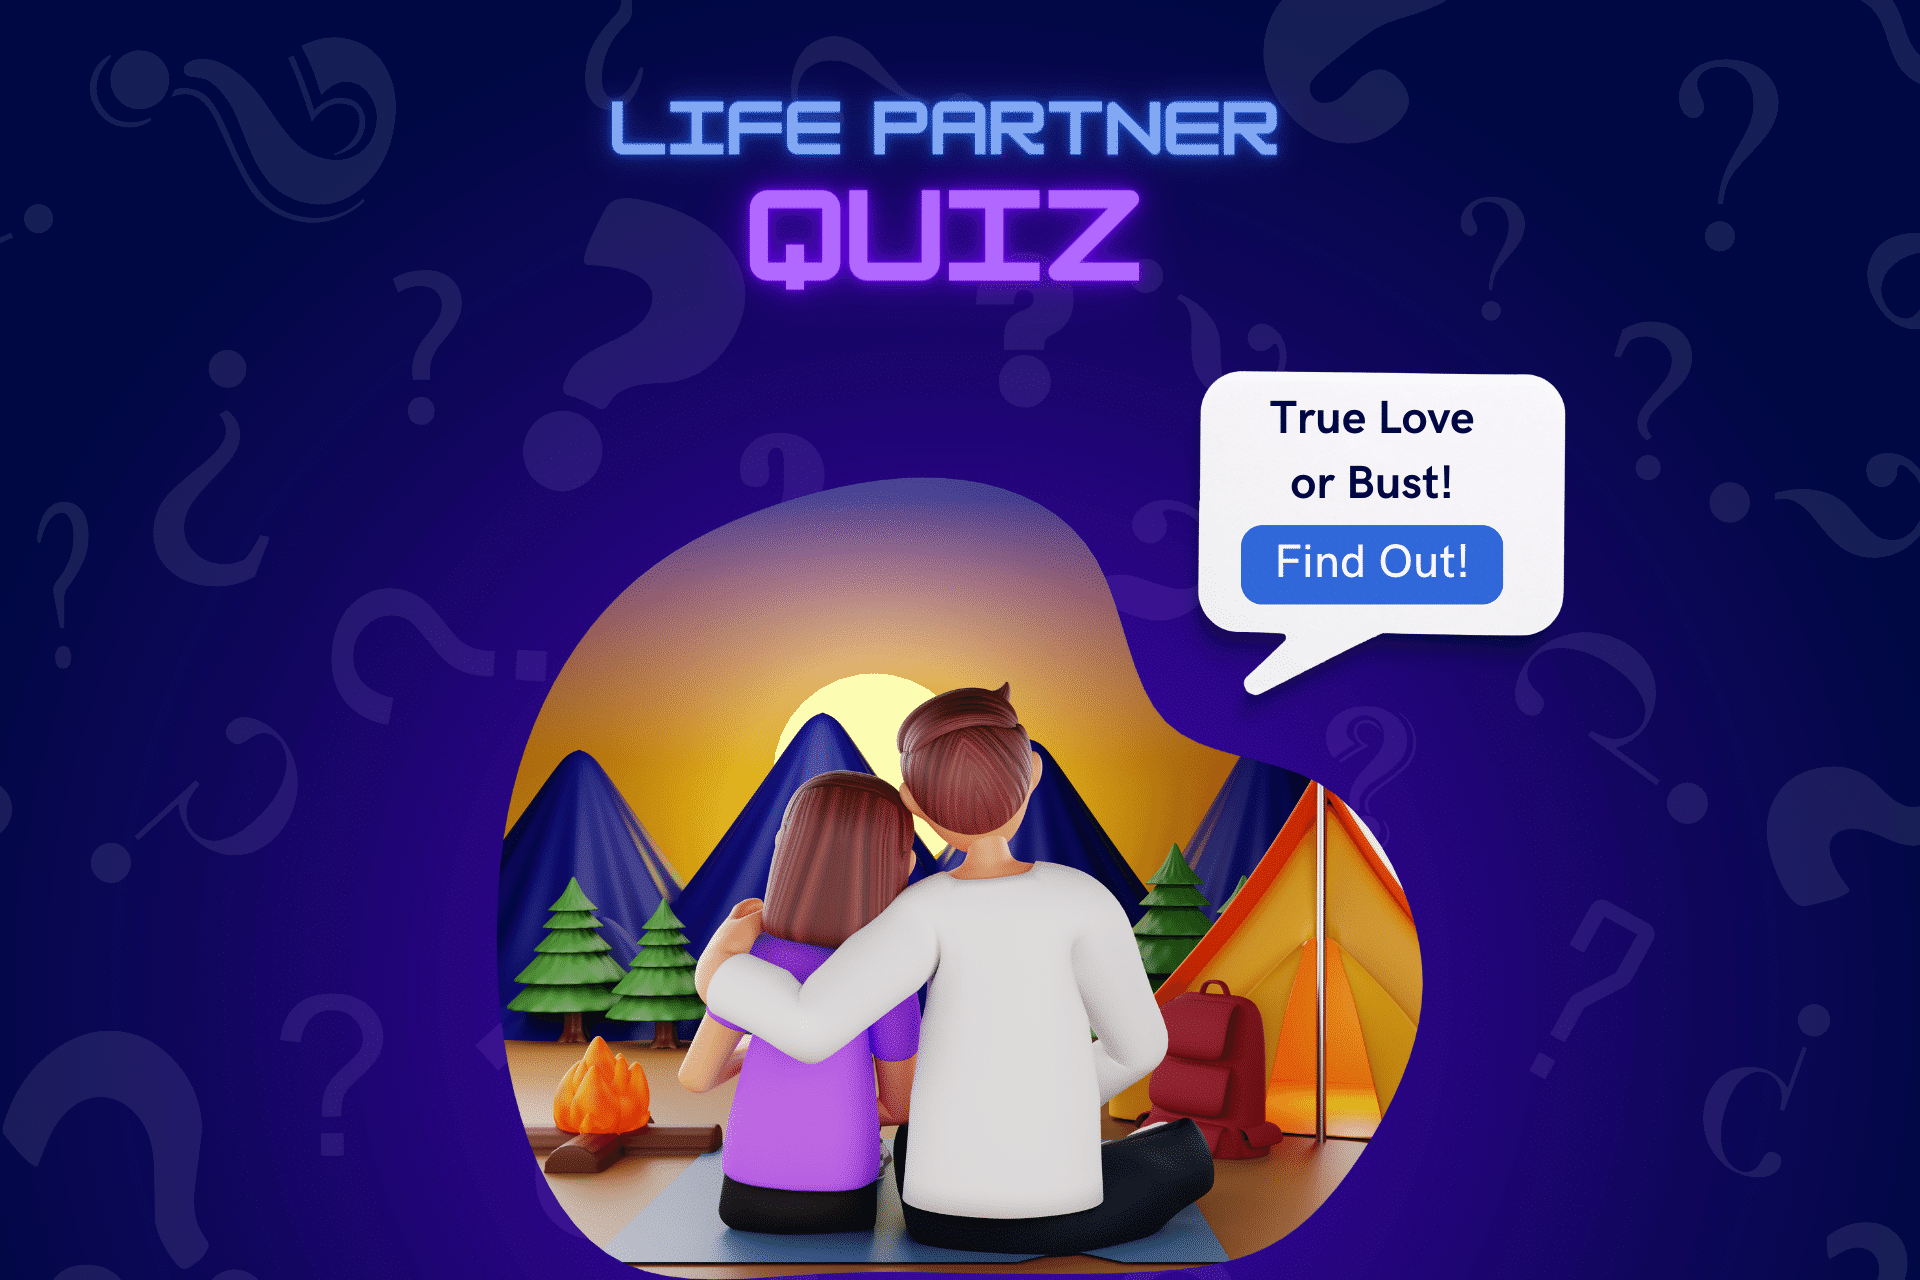 life partner quiz